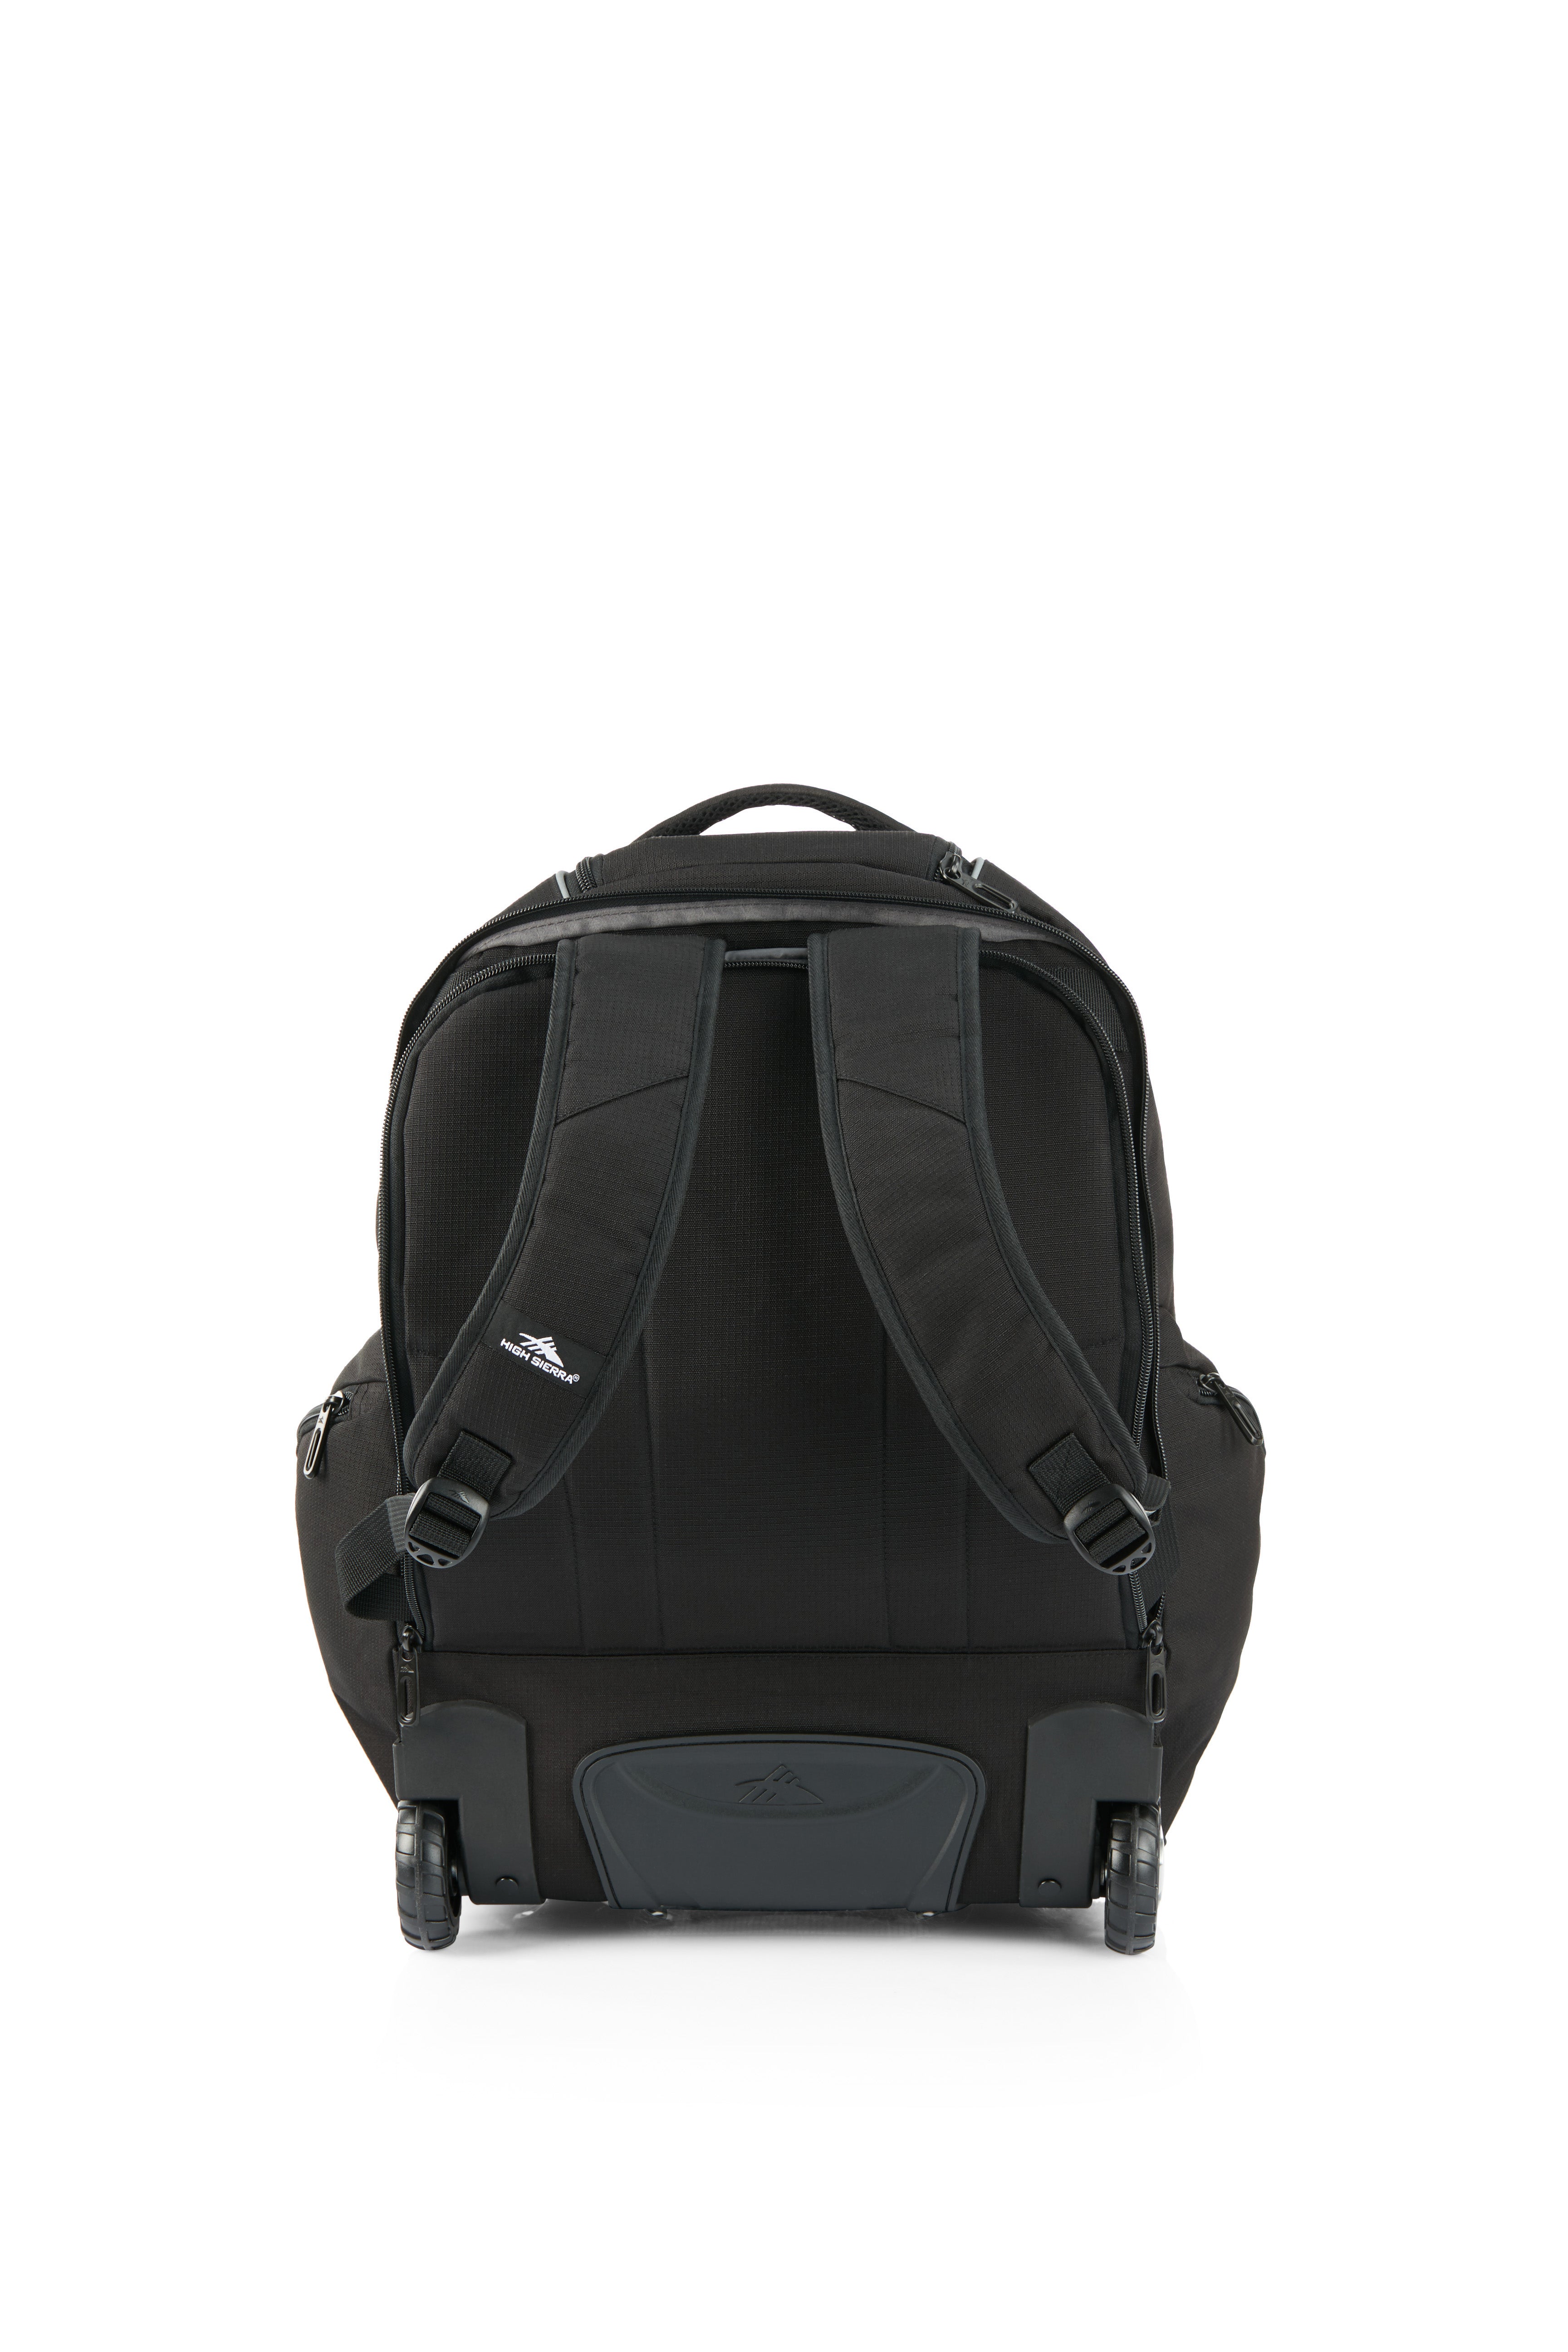 High Sierra - Access 3.0 Eco Pro Wheeled backpack - Black-7